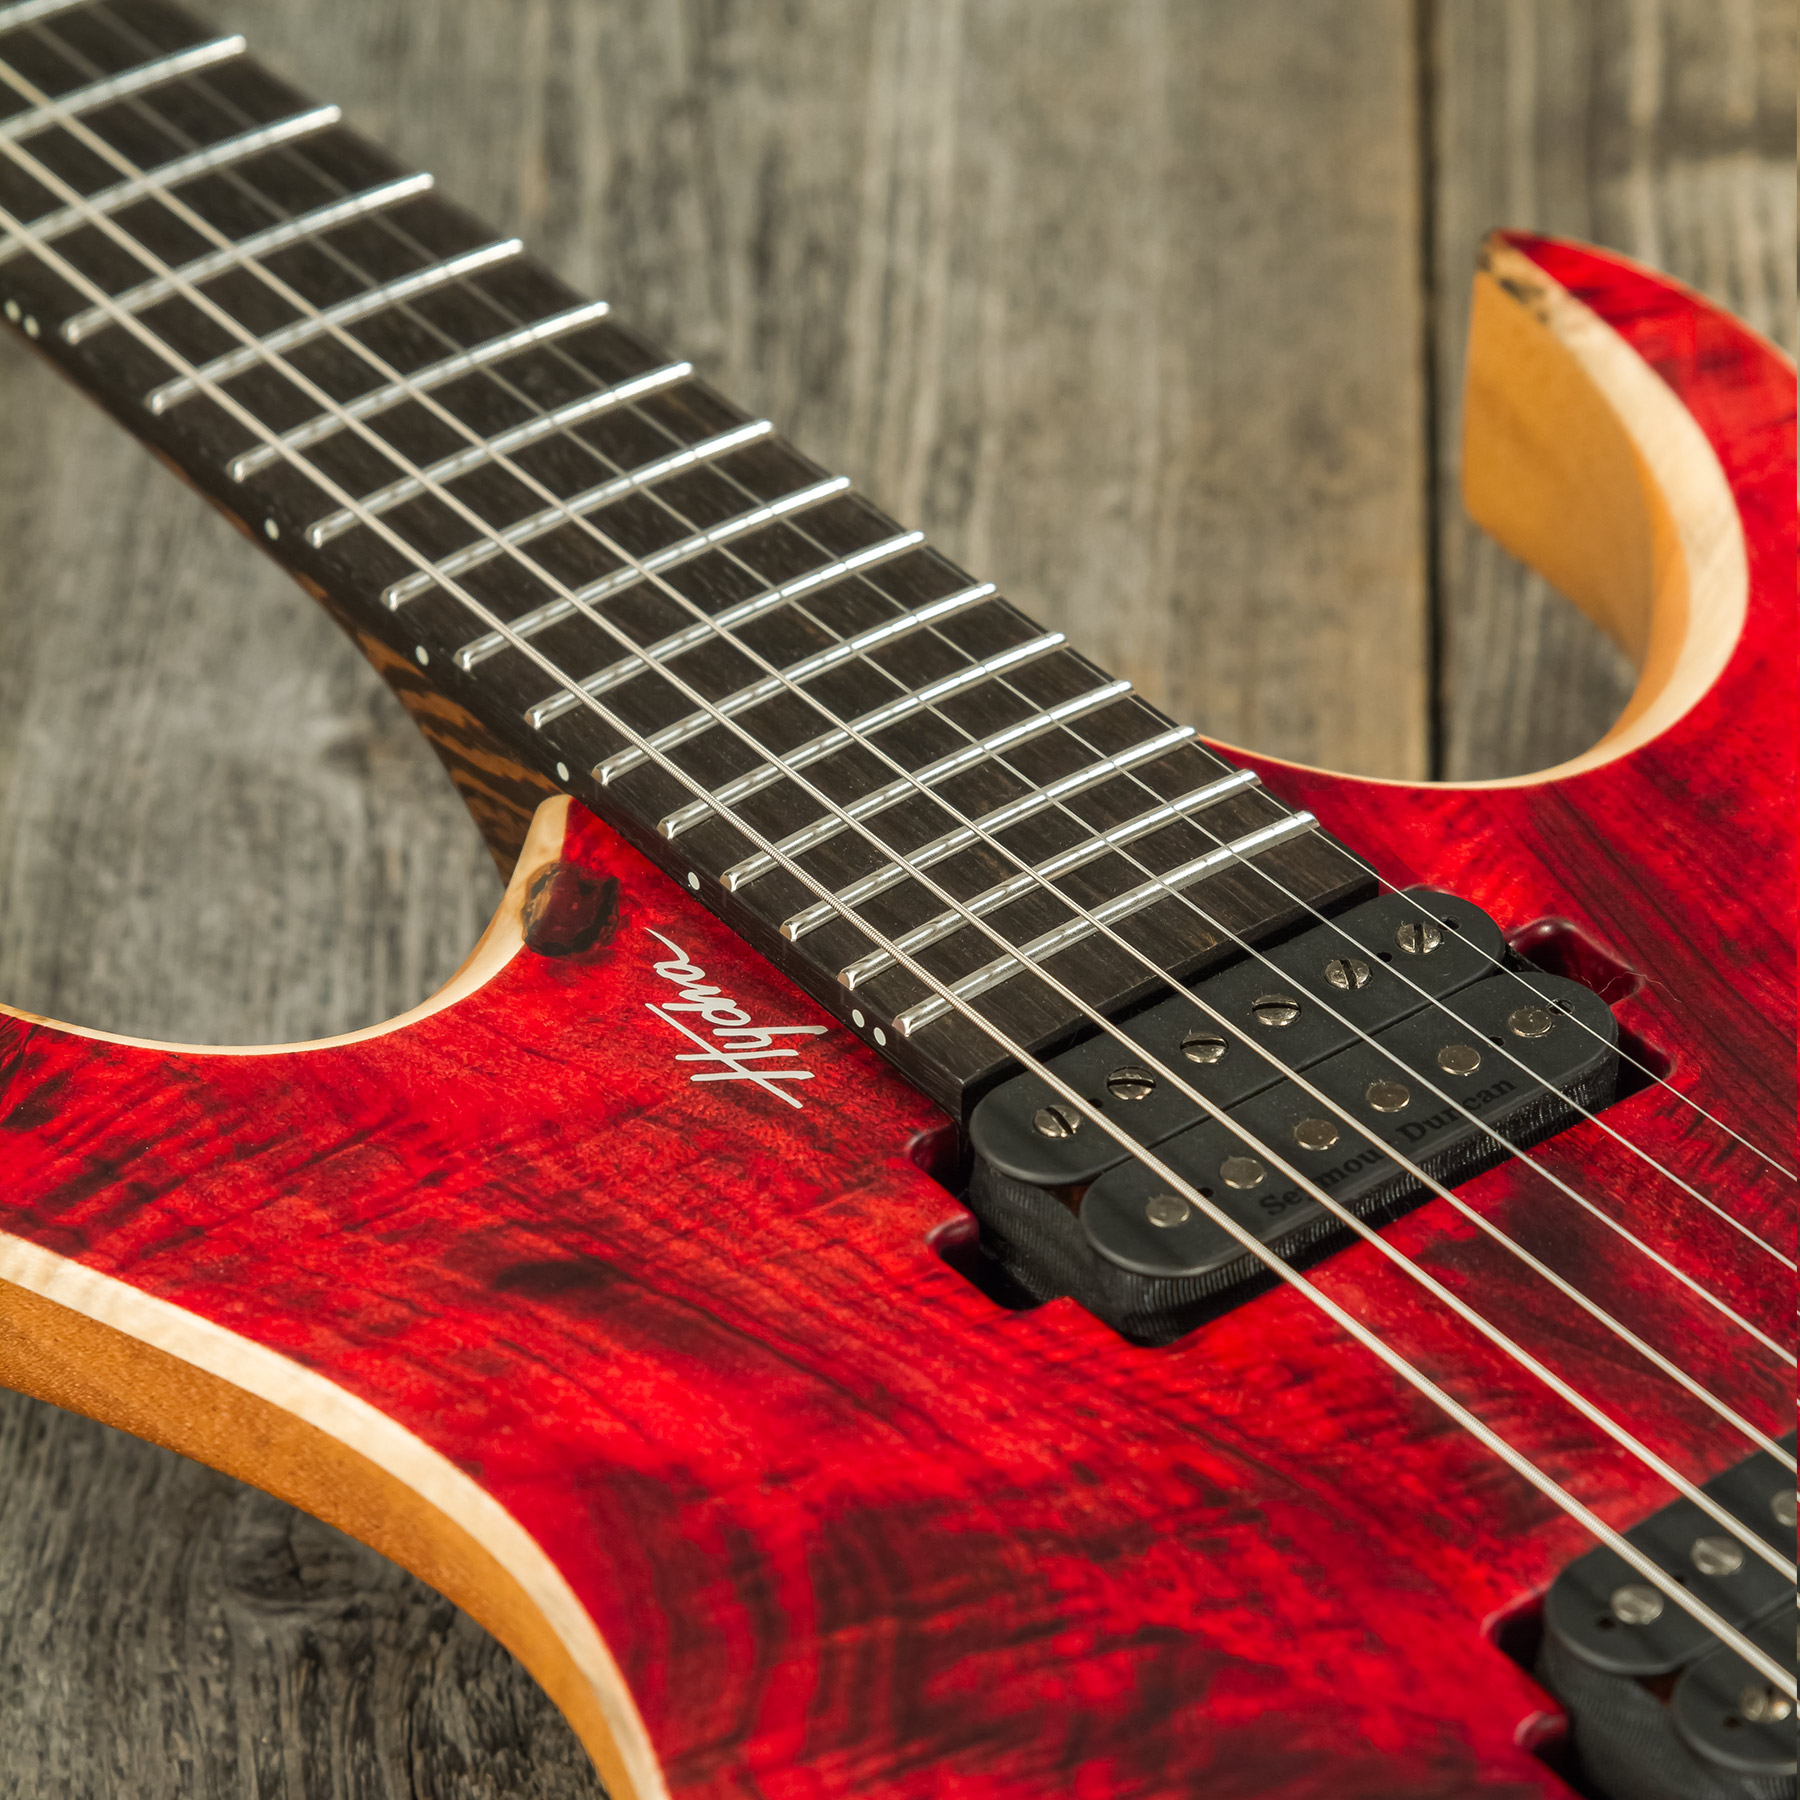 Mayones Guitars Hydra Elite 6 2h Seymour Duncan Ht Eb #hf2008335 - Dirty Red Satin - Metal electric guitar - Variation 4